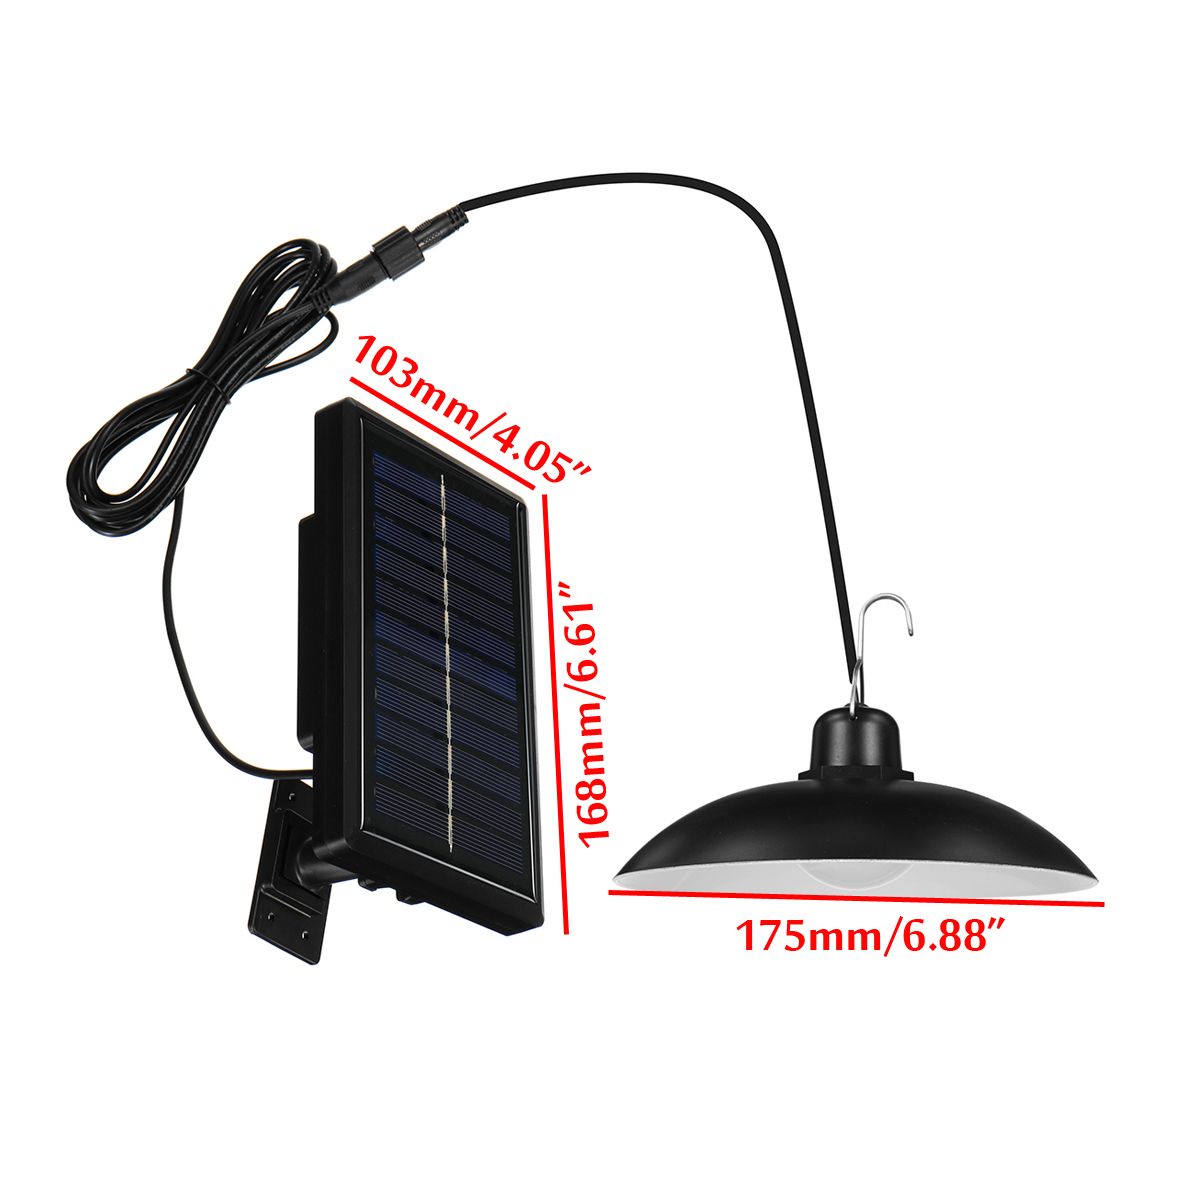 Waterproof-Solar-LED-Pendant-Light-Outdoor-Flood-Hanging-Garden-Lamp--Remote-Control-1761918